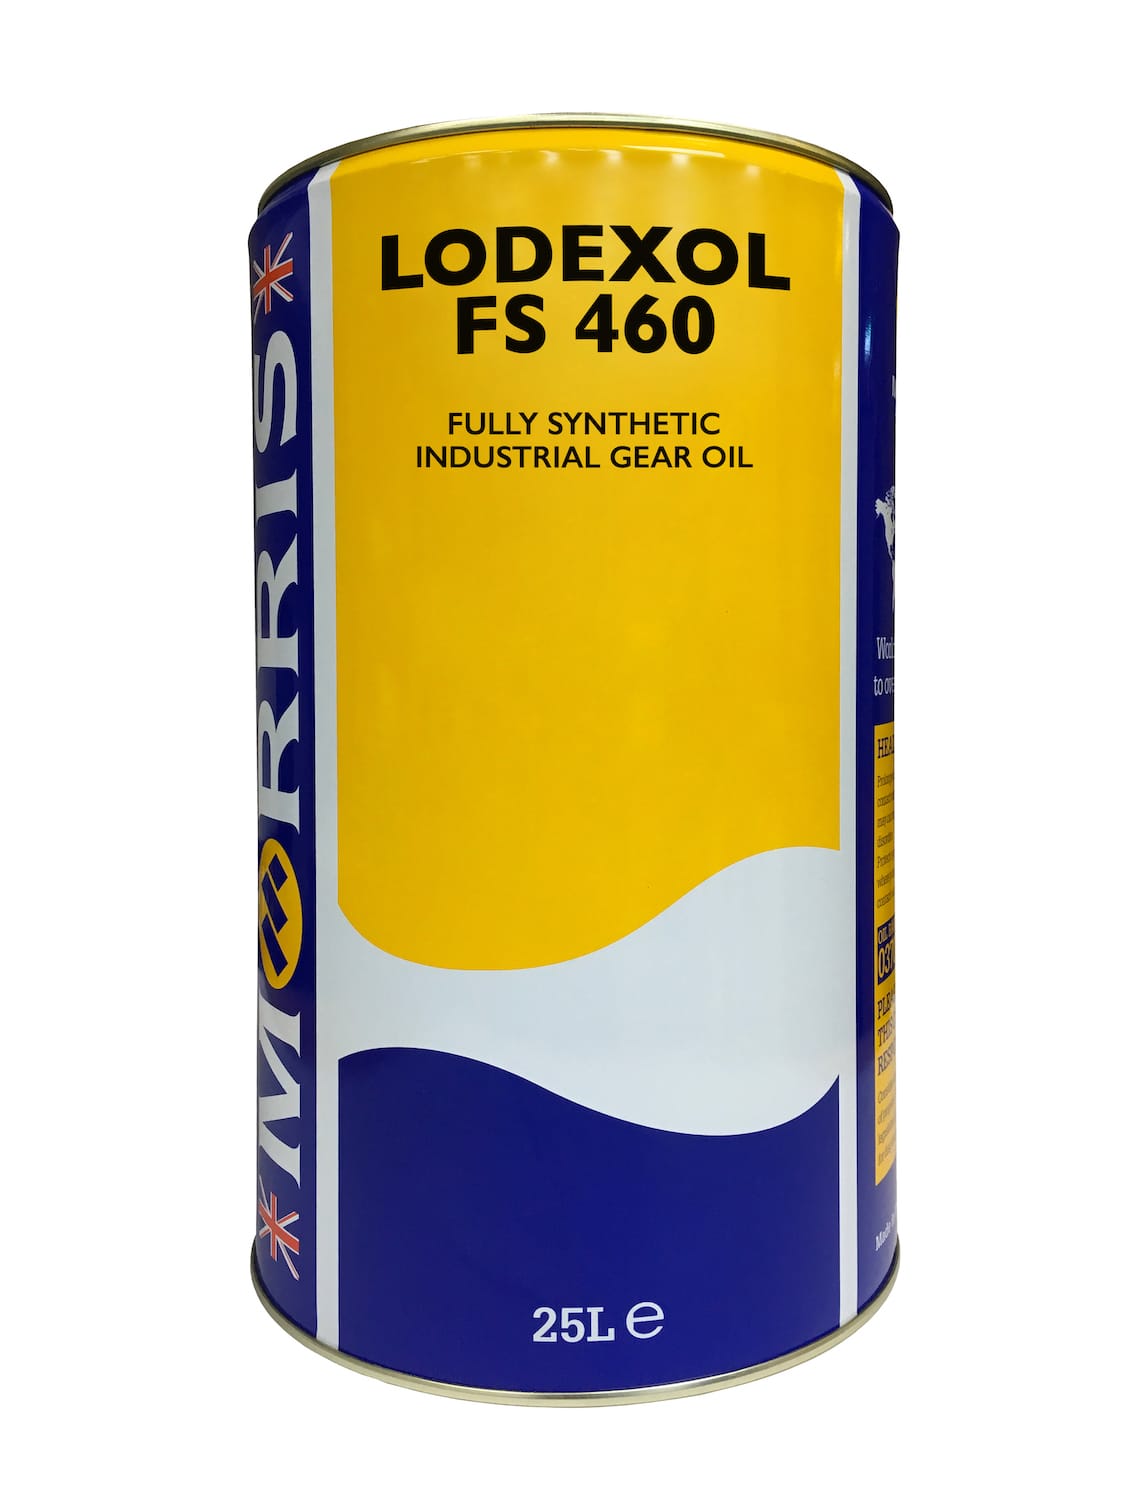 Lodexol FS 460